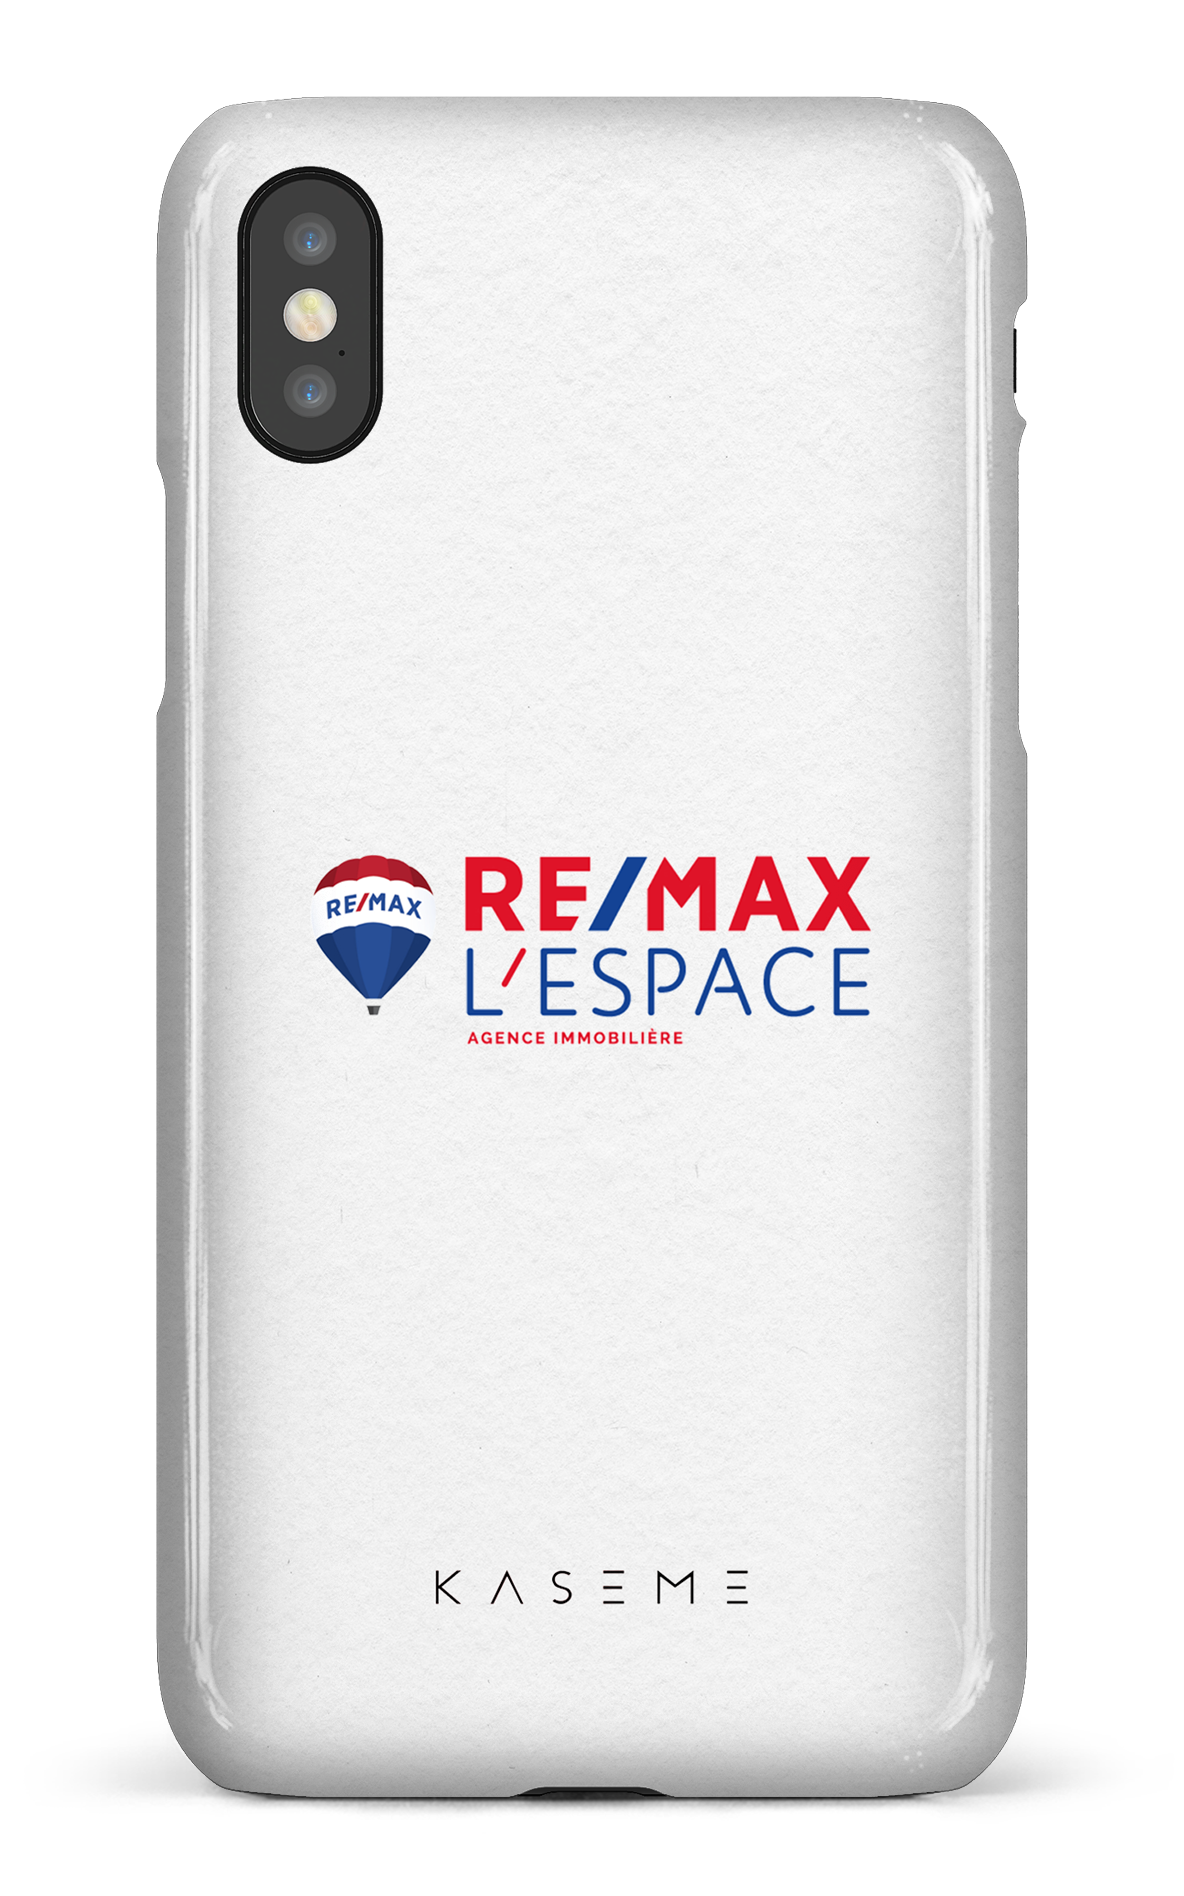 Remax L'Espace Blanc - iPhone X/XS